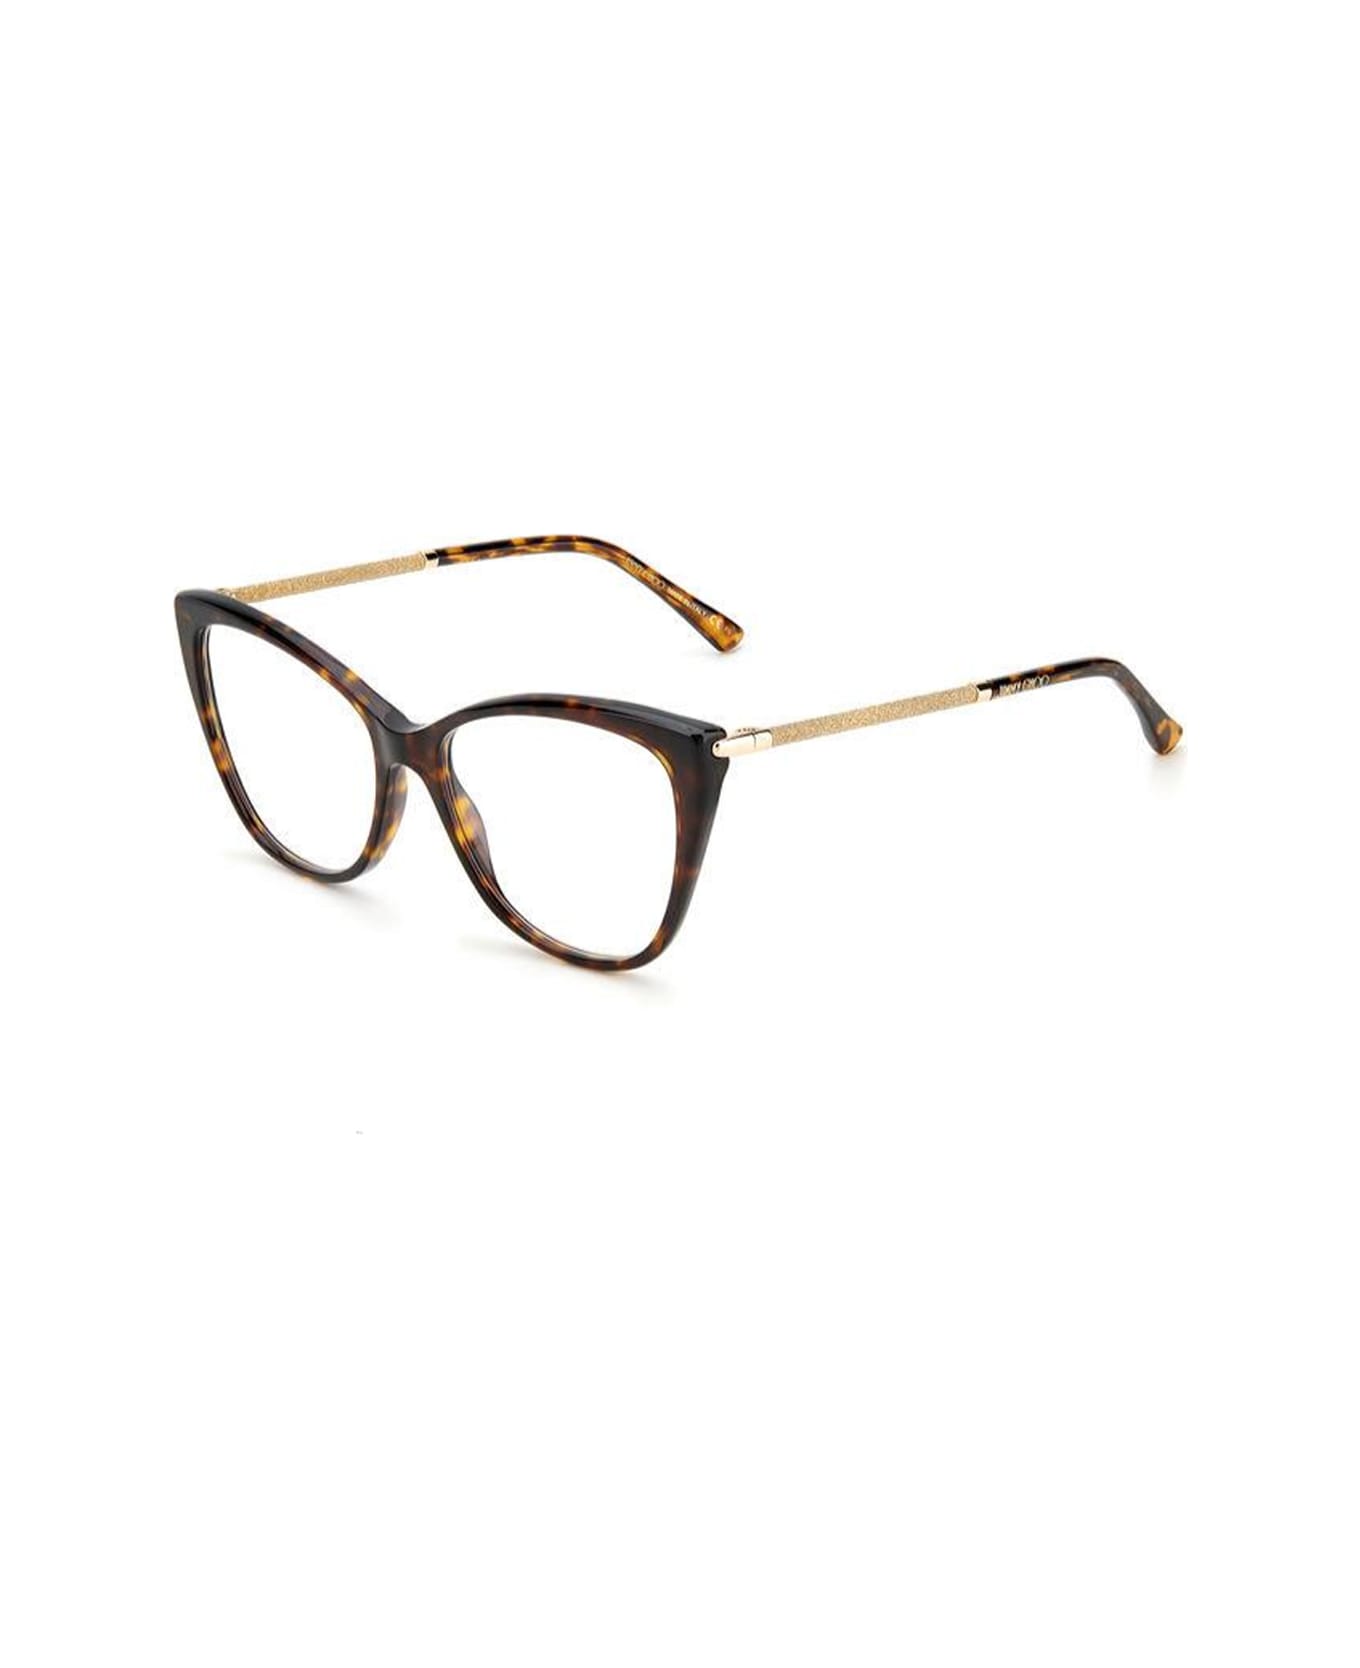 Jimmy Choo Eyewear Jc331 086/16 Glasses - Marrone アイウェア